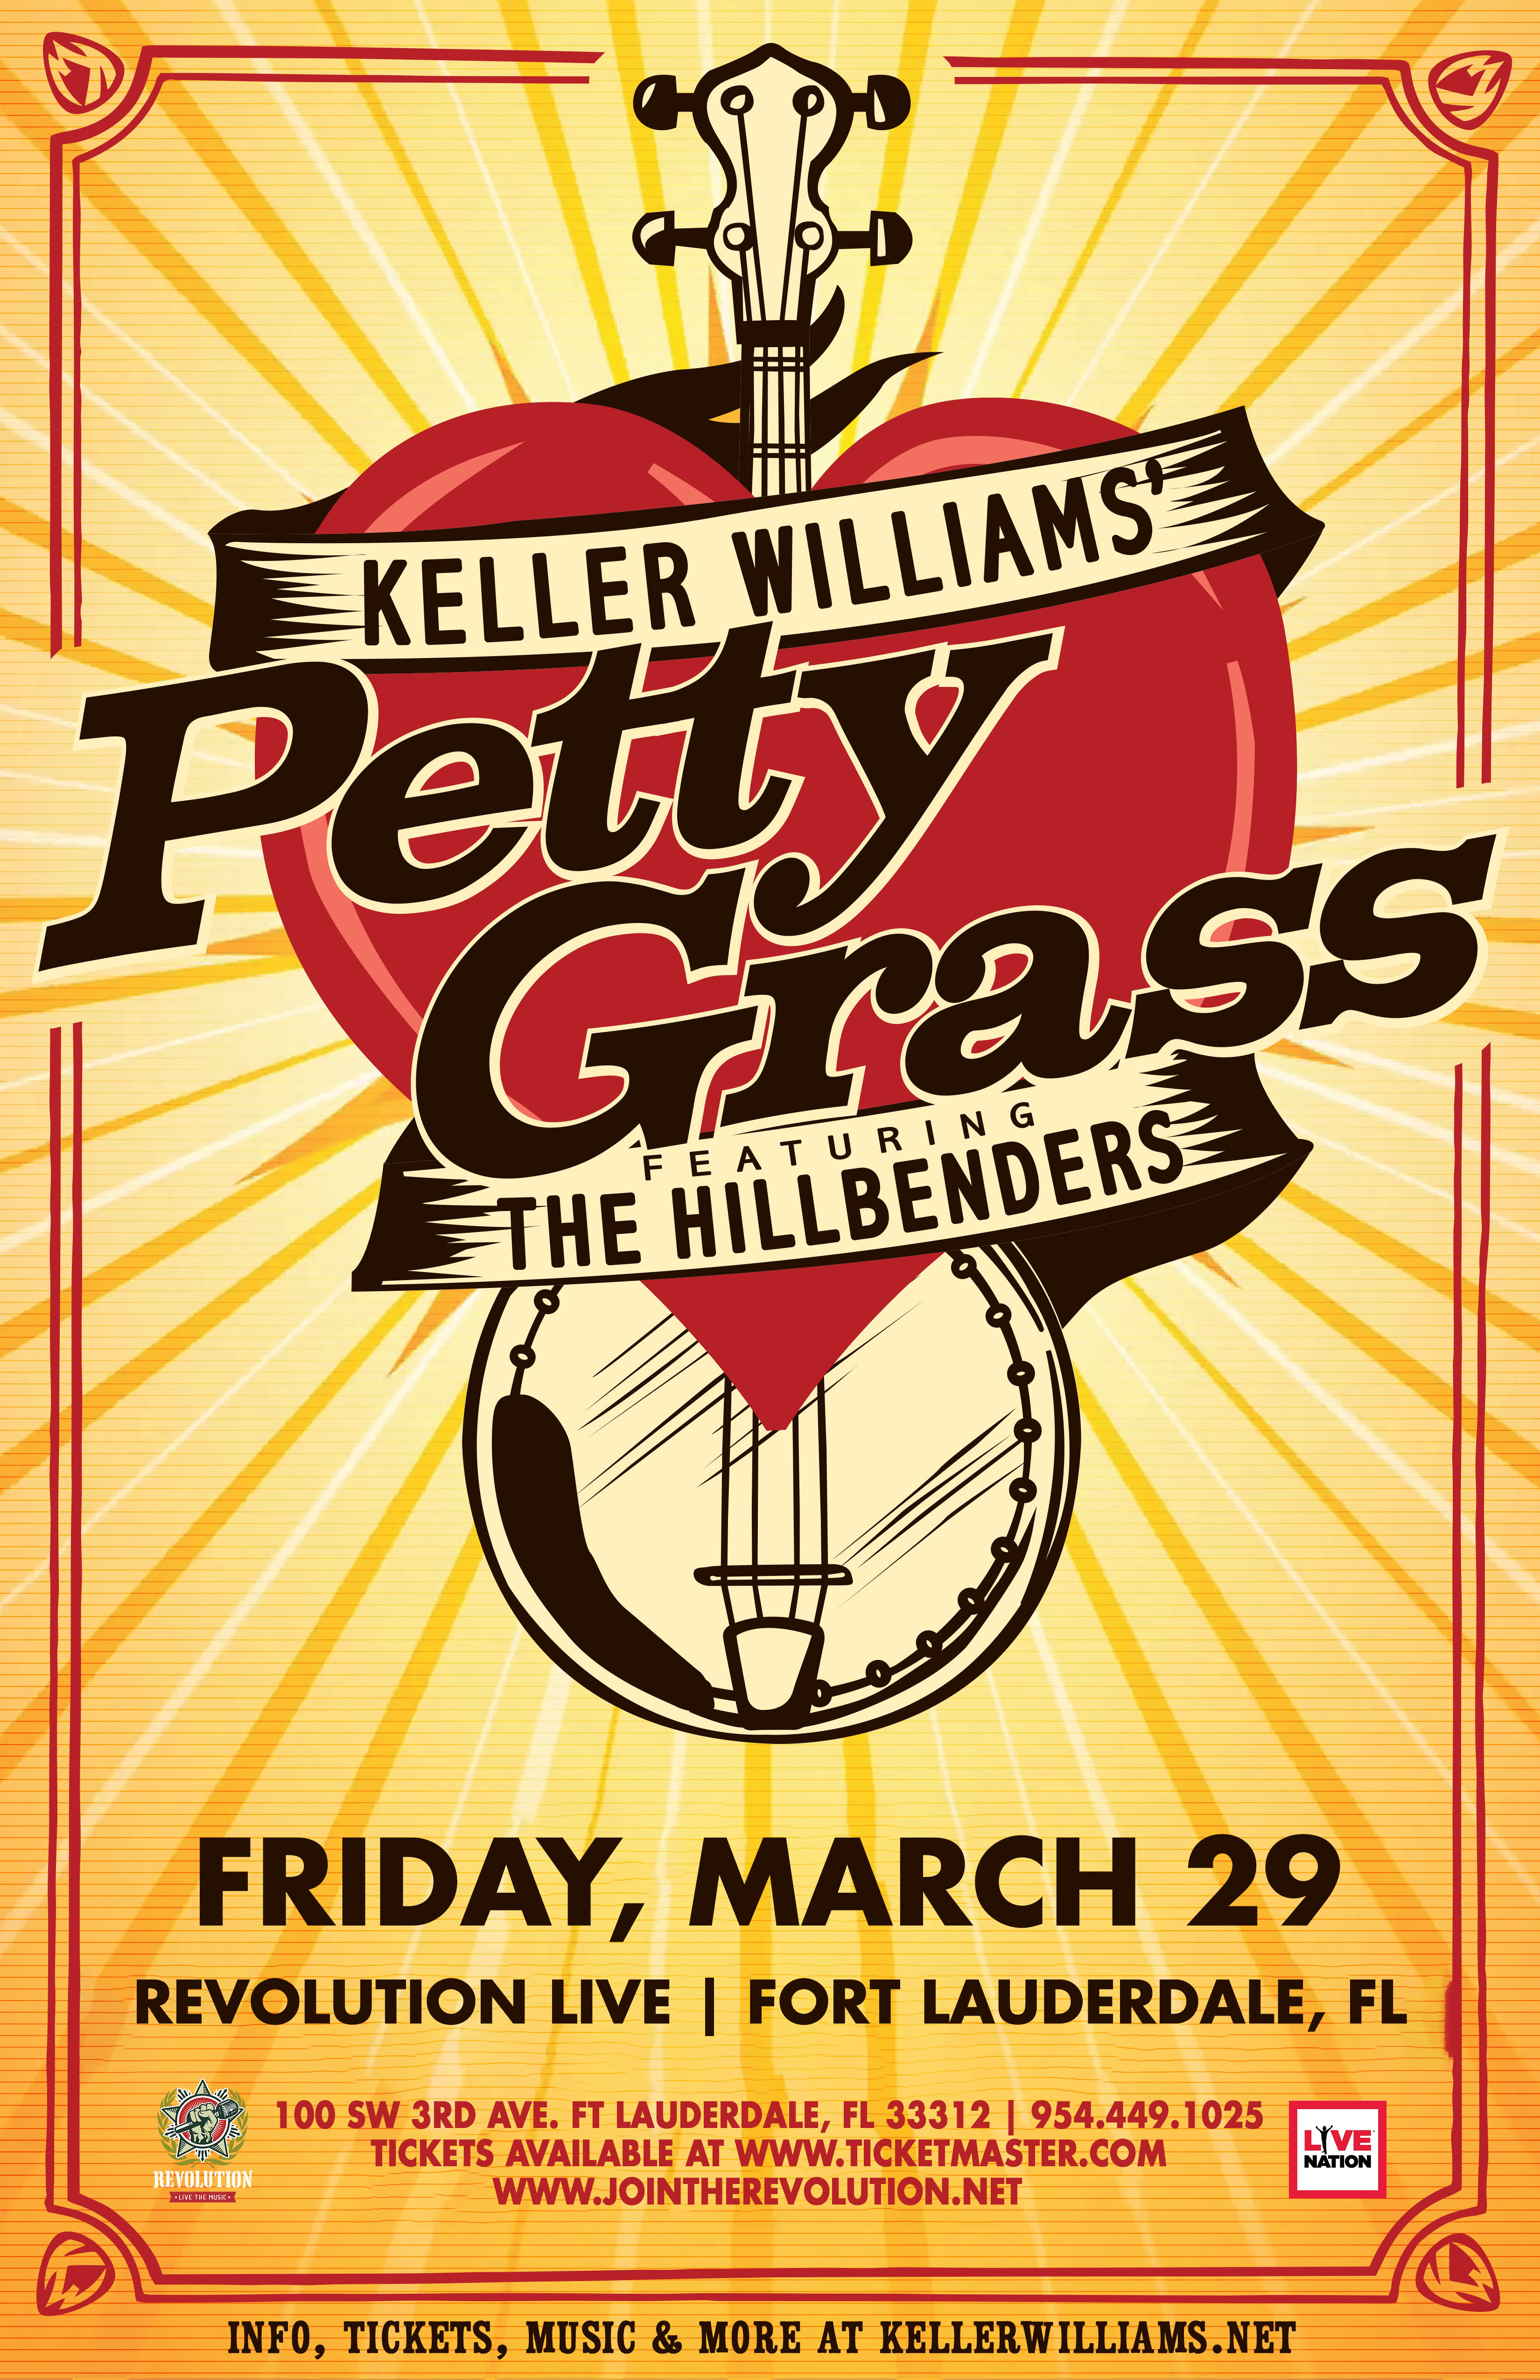 Keller Williams’ PettyGrass ft. The HillBenders